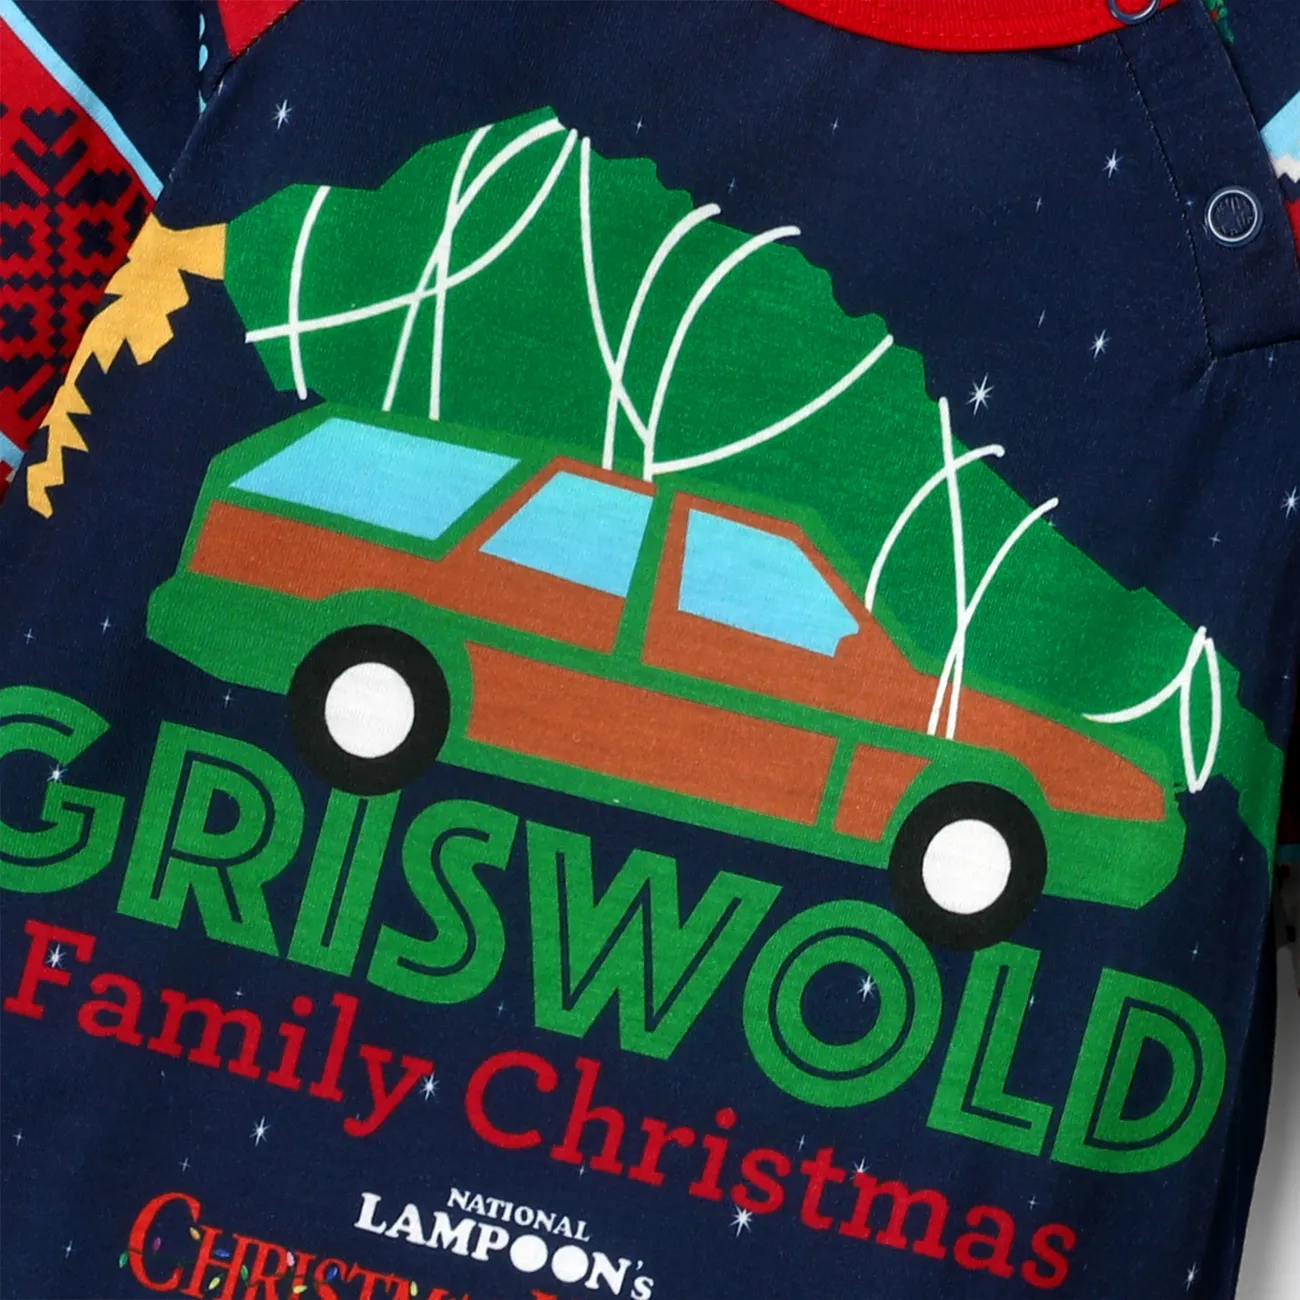 Christmas Vacation Navidad Looks familiares Manga larga Conjuntos combinados para familia Pijamas (Flame Resistant) Multicolor big image 1